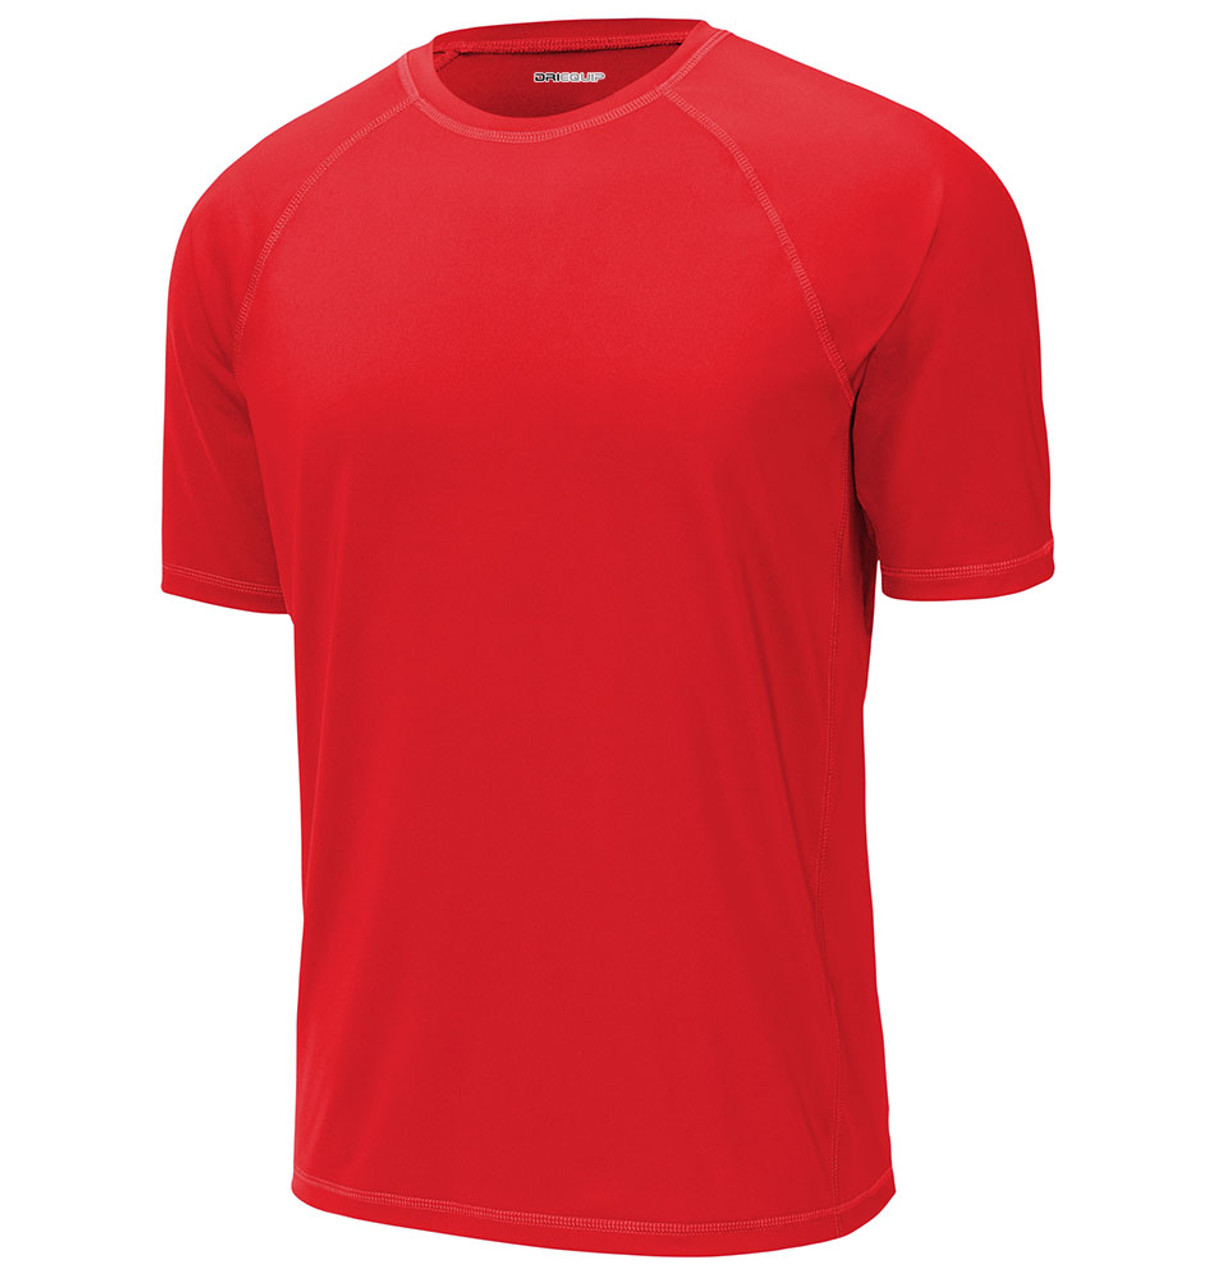 Red Men's UPF50 Rash Guard Tee Shirt